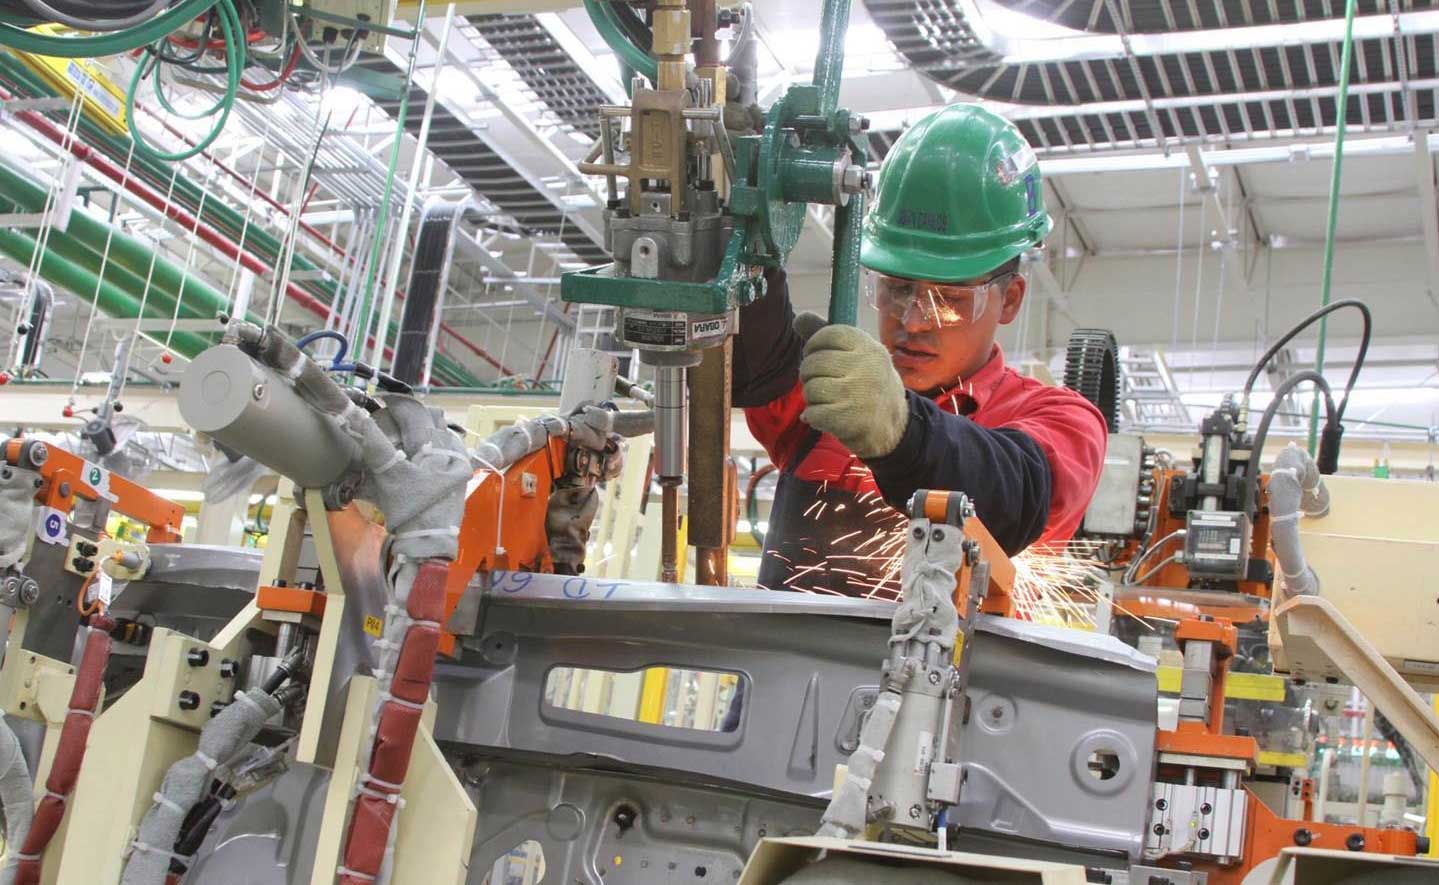 Un hombre trabaja en una maquinaria industrial. Porta casco verde.